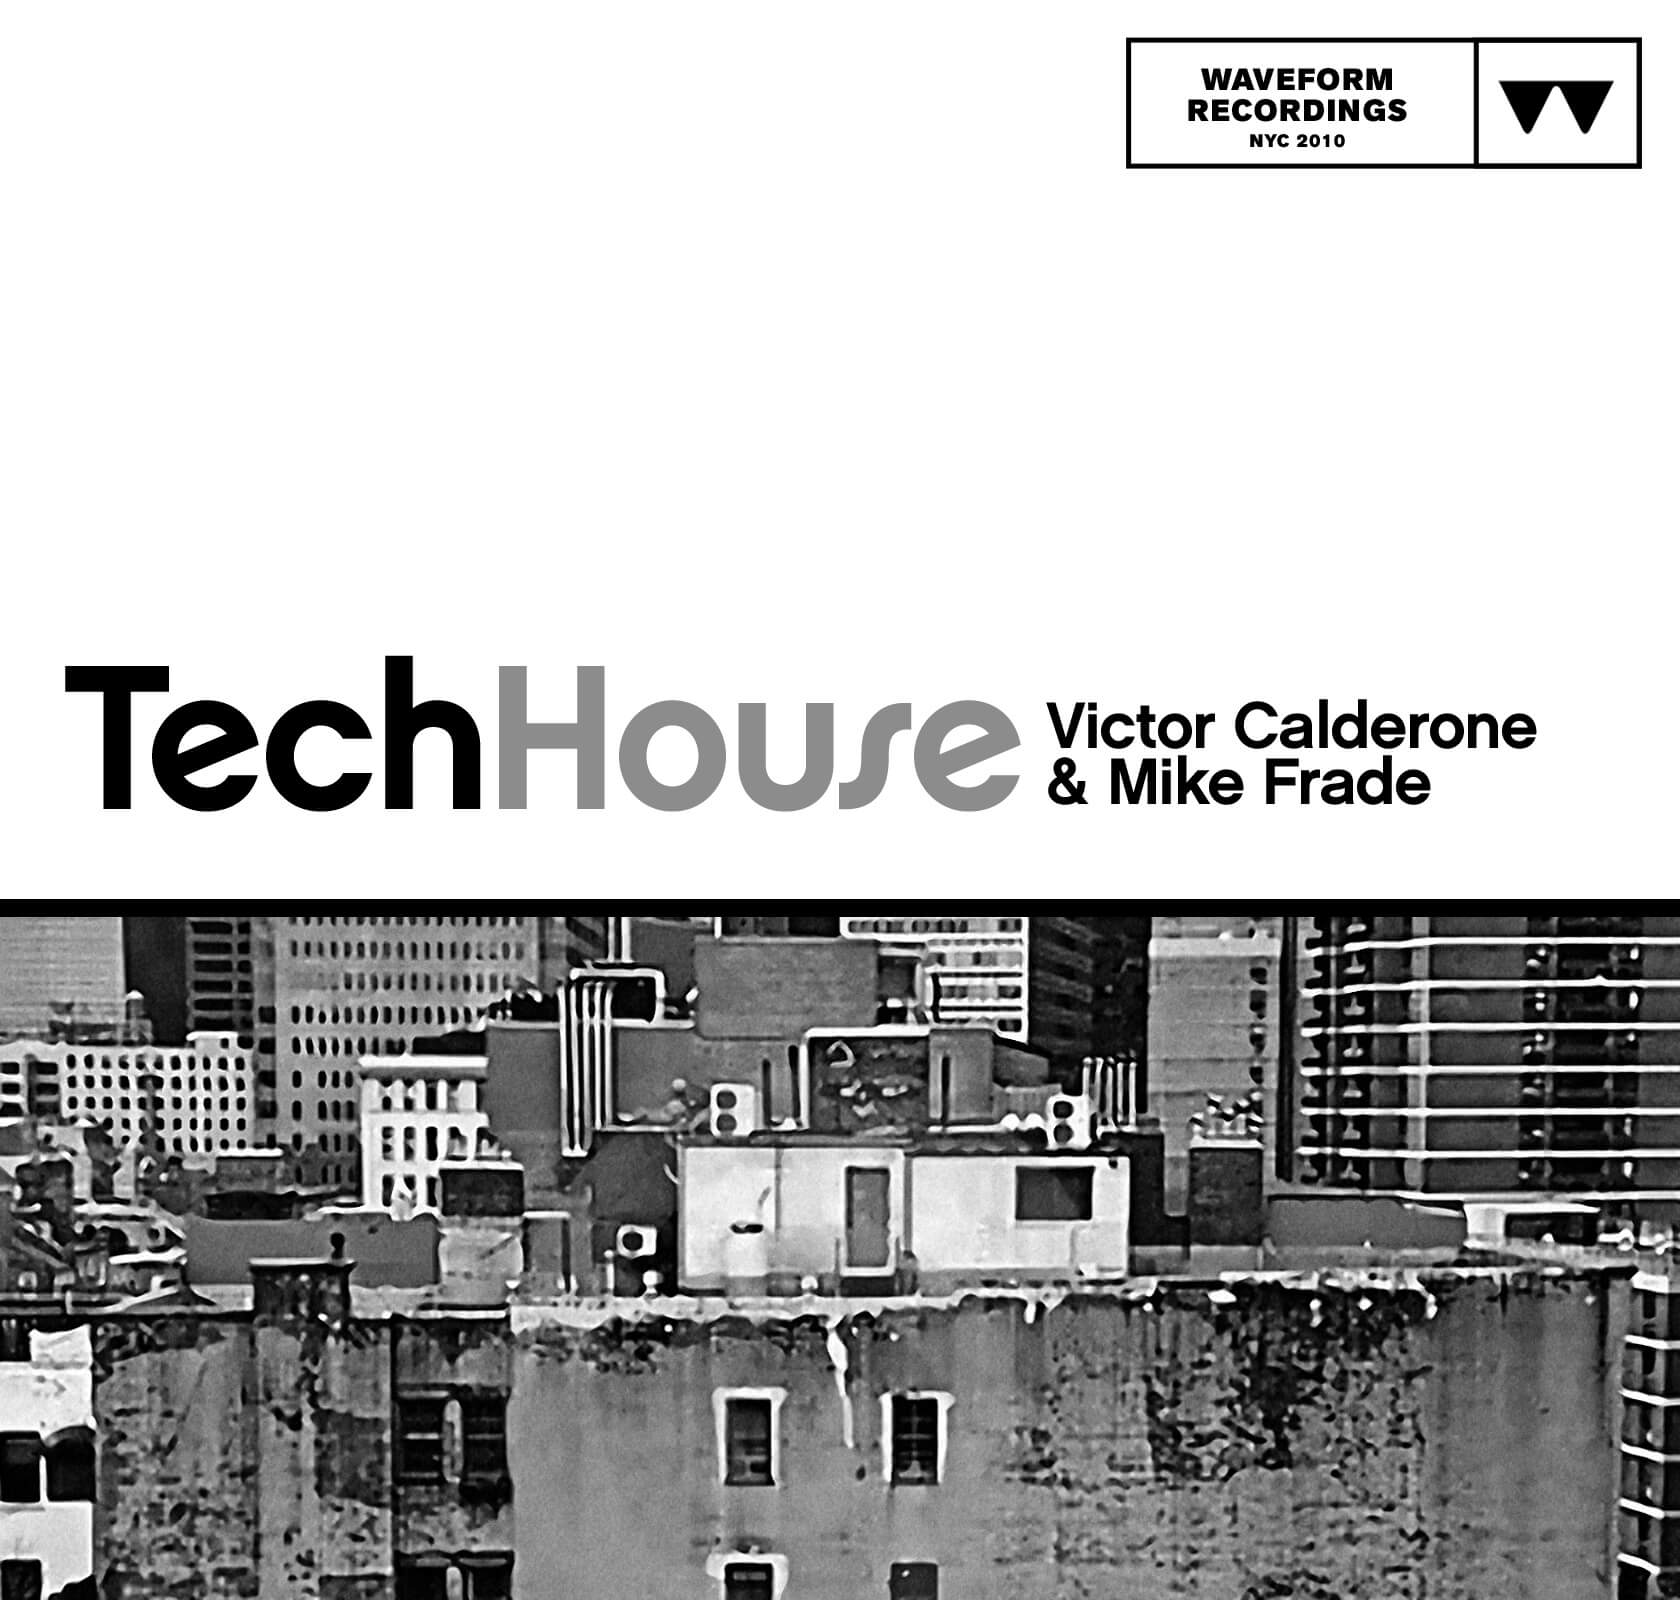 Victor Calderone & Mike Frade: Tech House